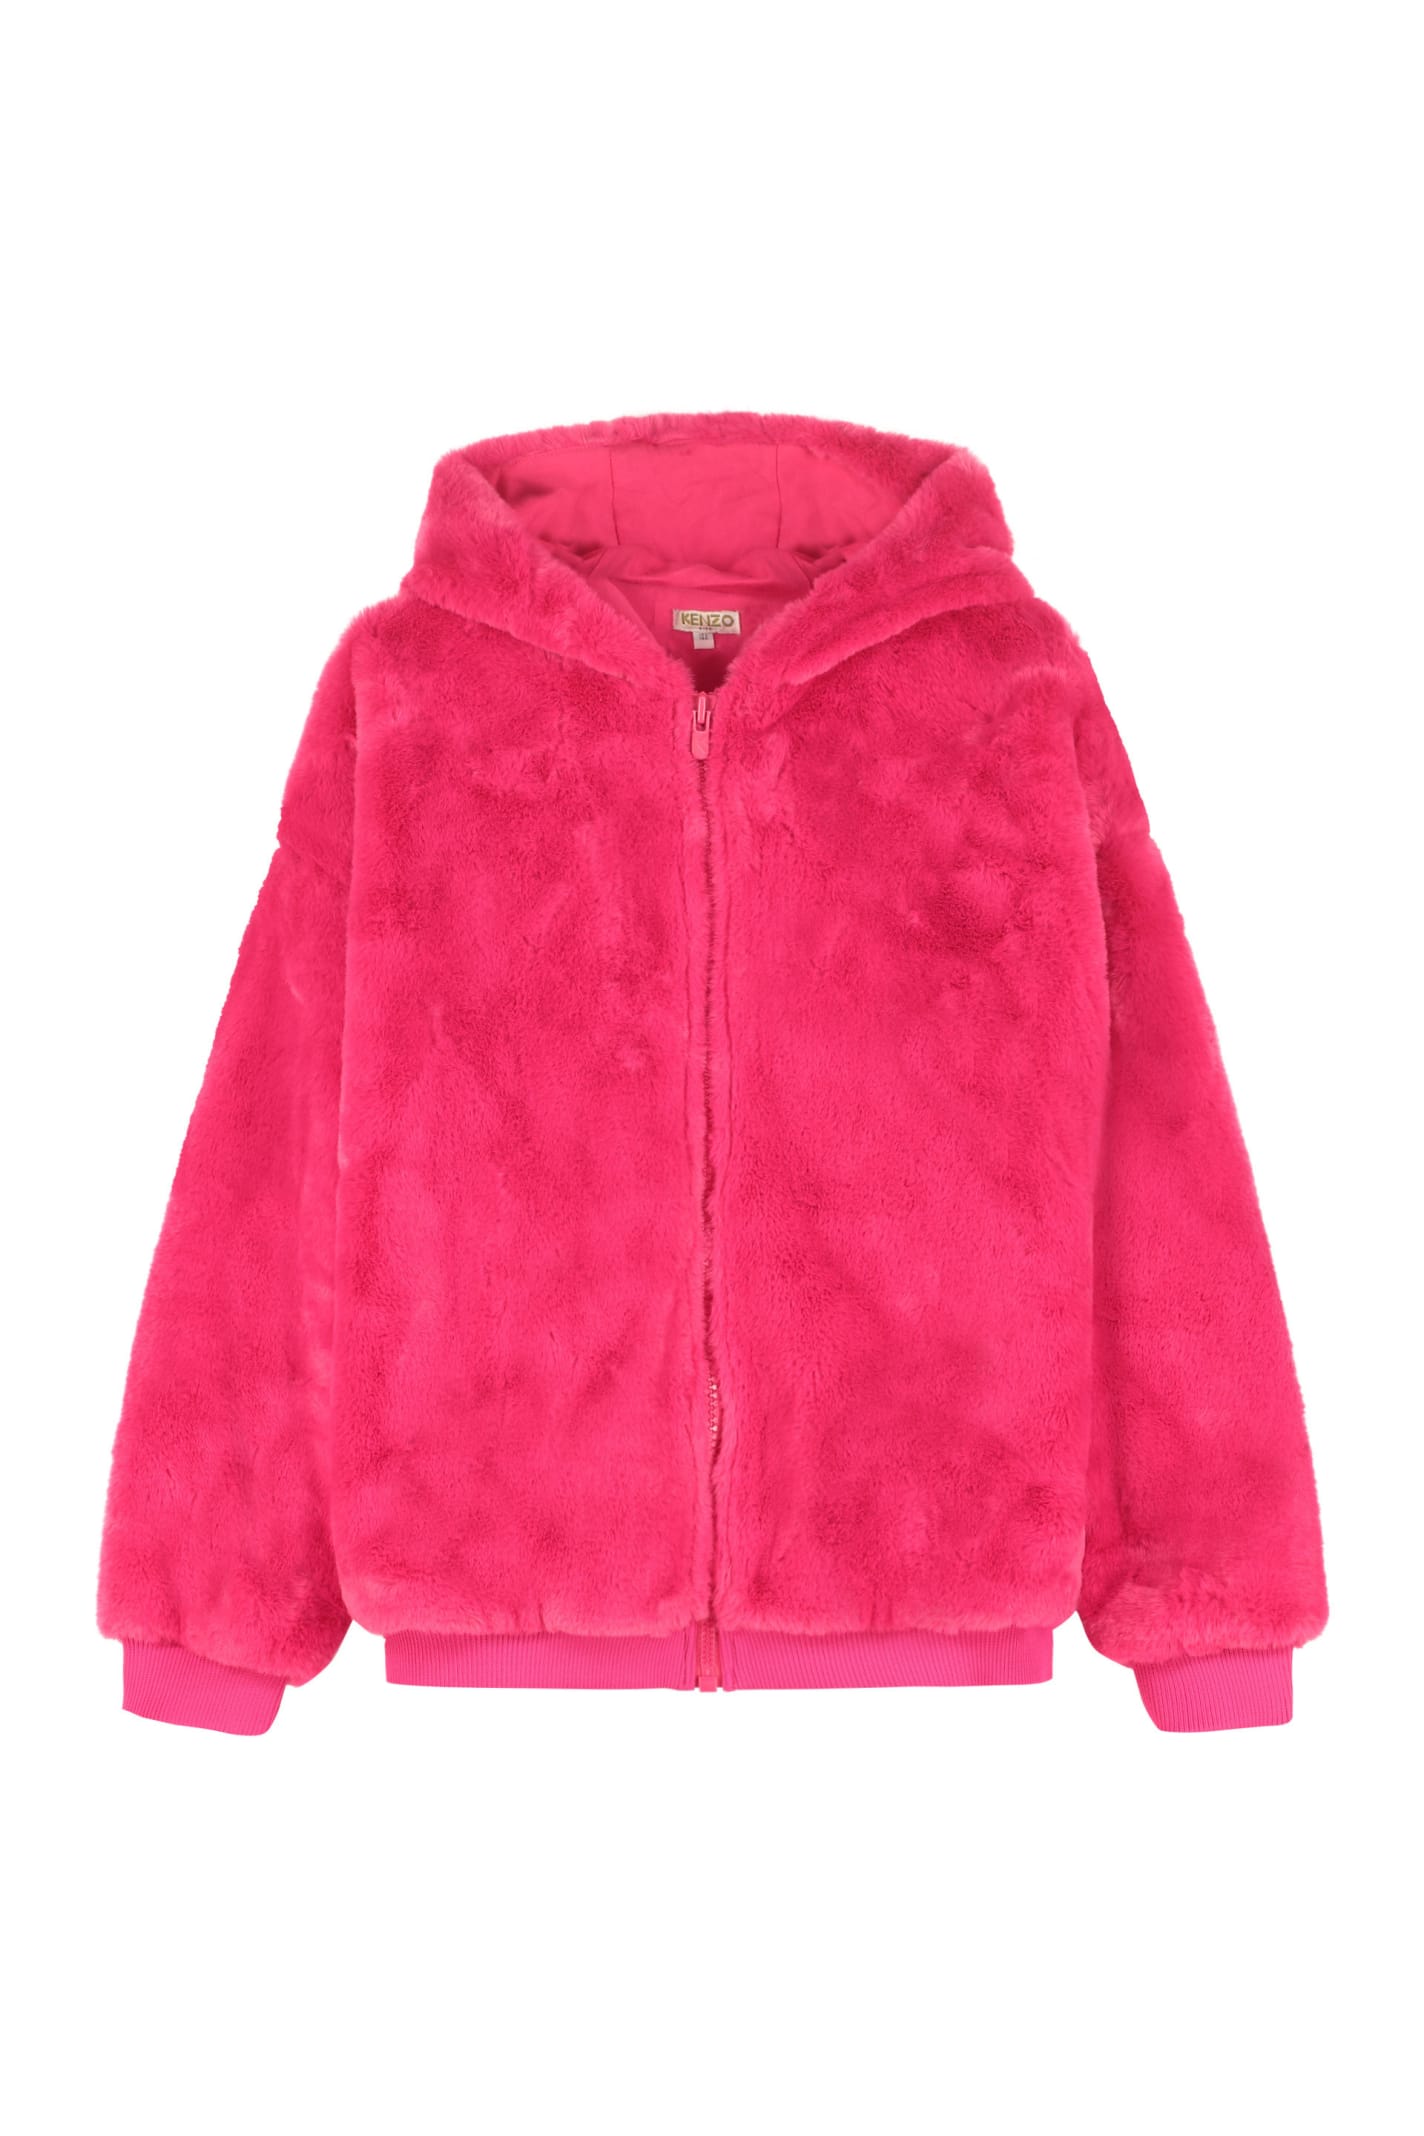 Photo of  Kenzo Kids Hooded Faux Fur Bomber Jacket- shop Kenzo Kids jackets online sales